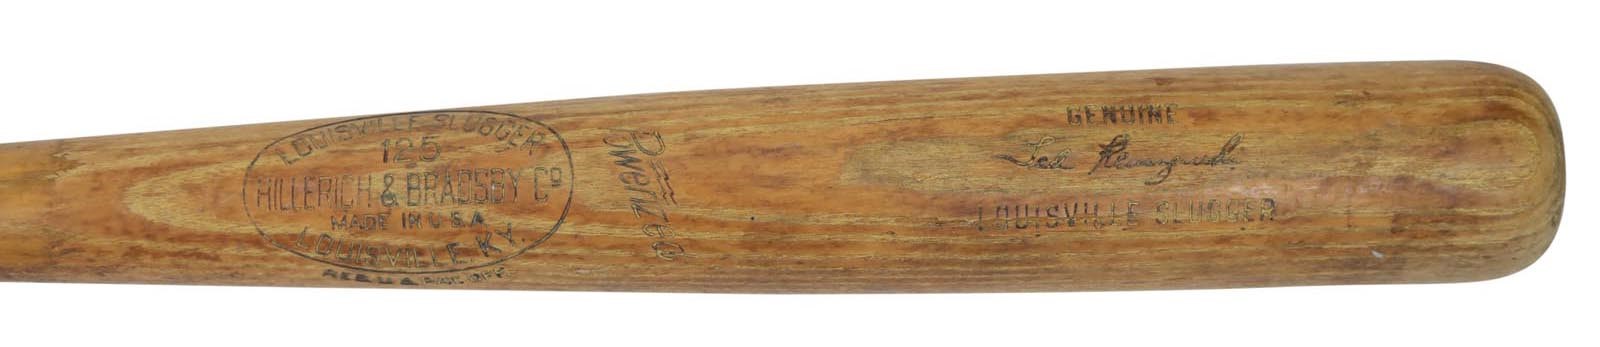 Bernie Stowe Cincinnati Reds Collection - 1950s Ted Kluszewski Game Used Bat with Fiberglass Grip